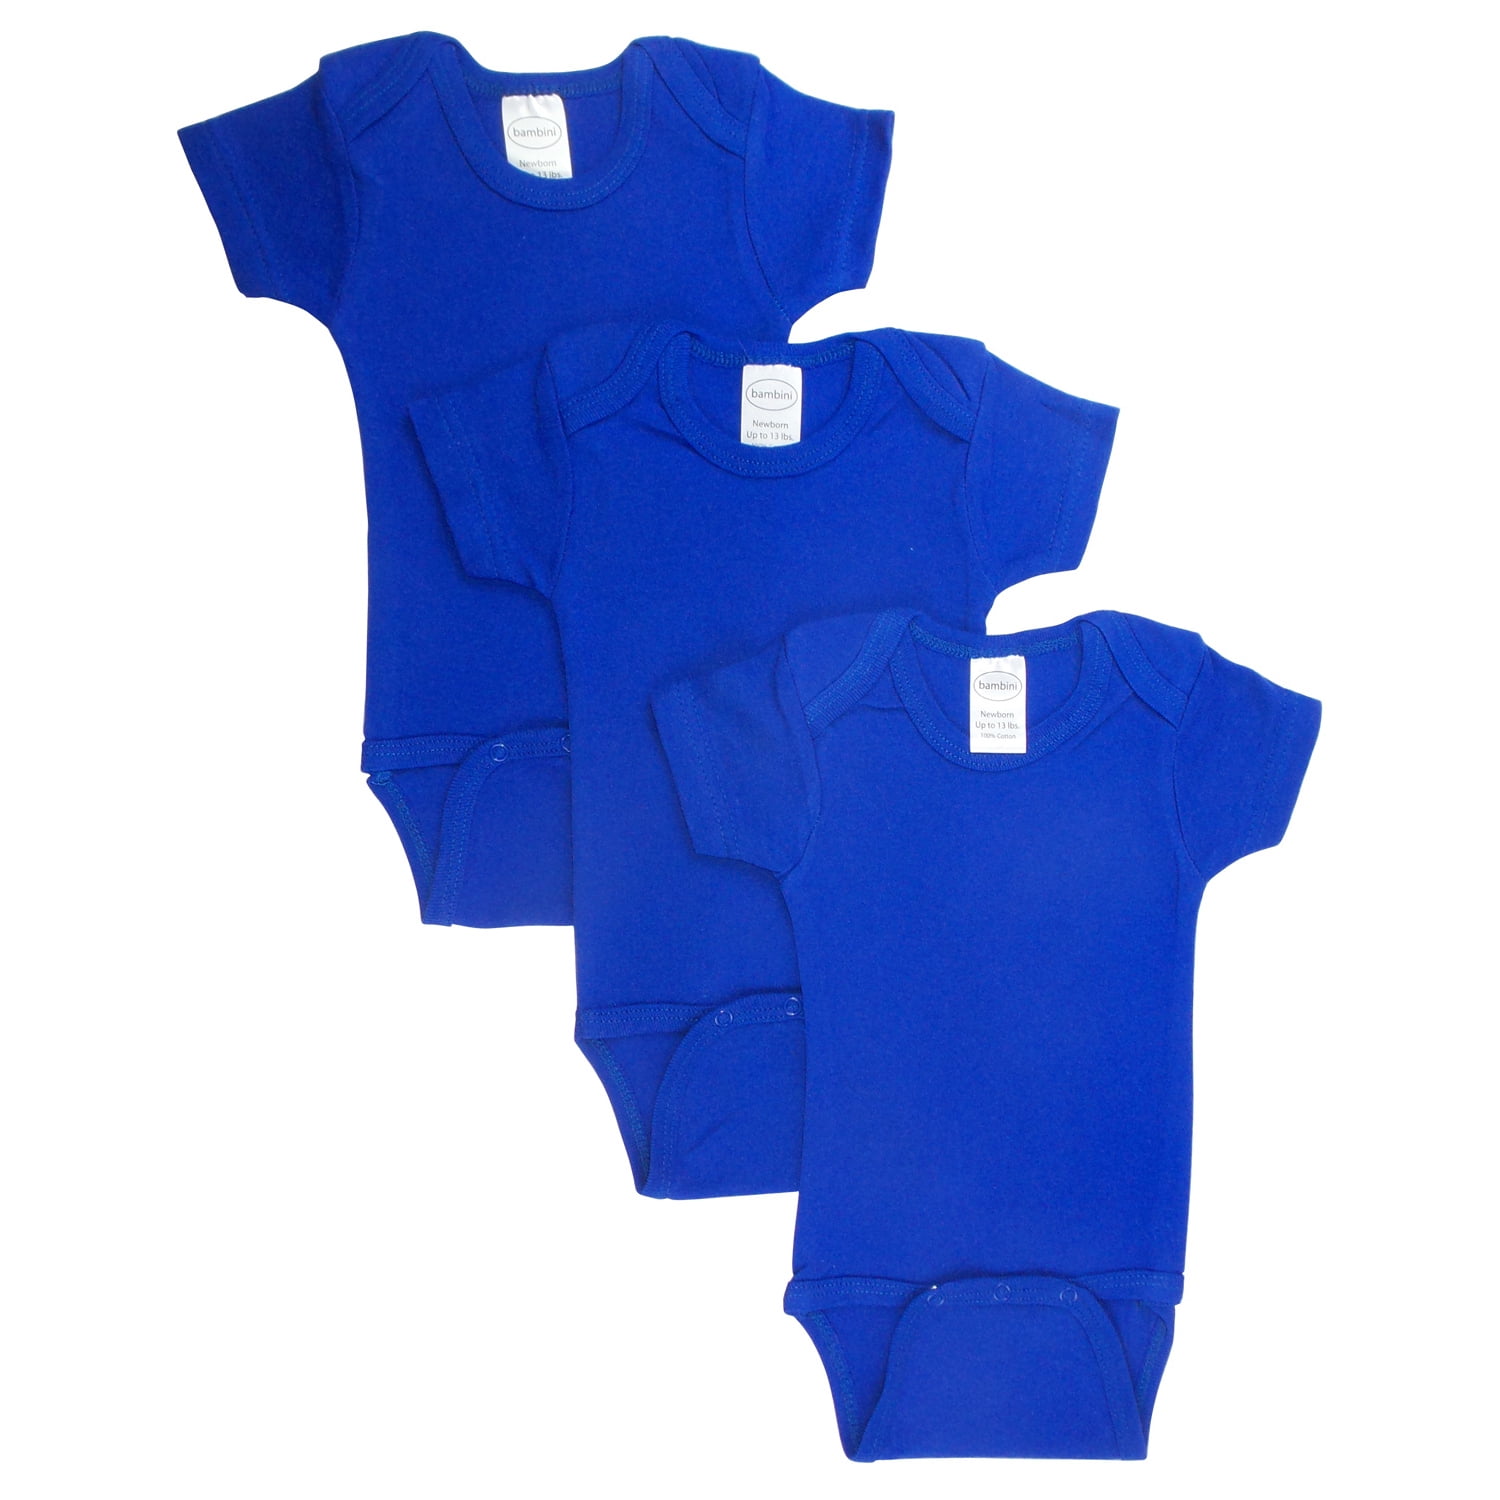 Ls-0162 Short Sleeve Bodysuit - Blue, Newborn - Pack Of 3